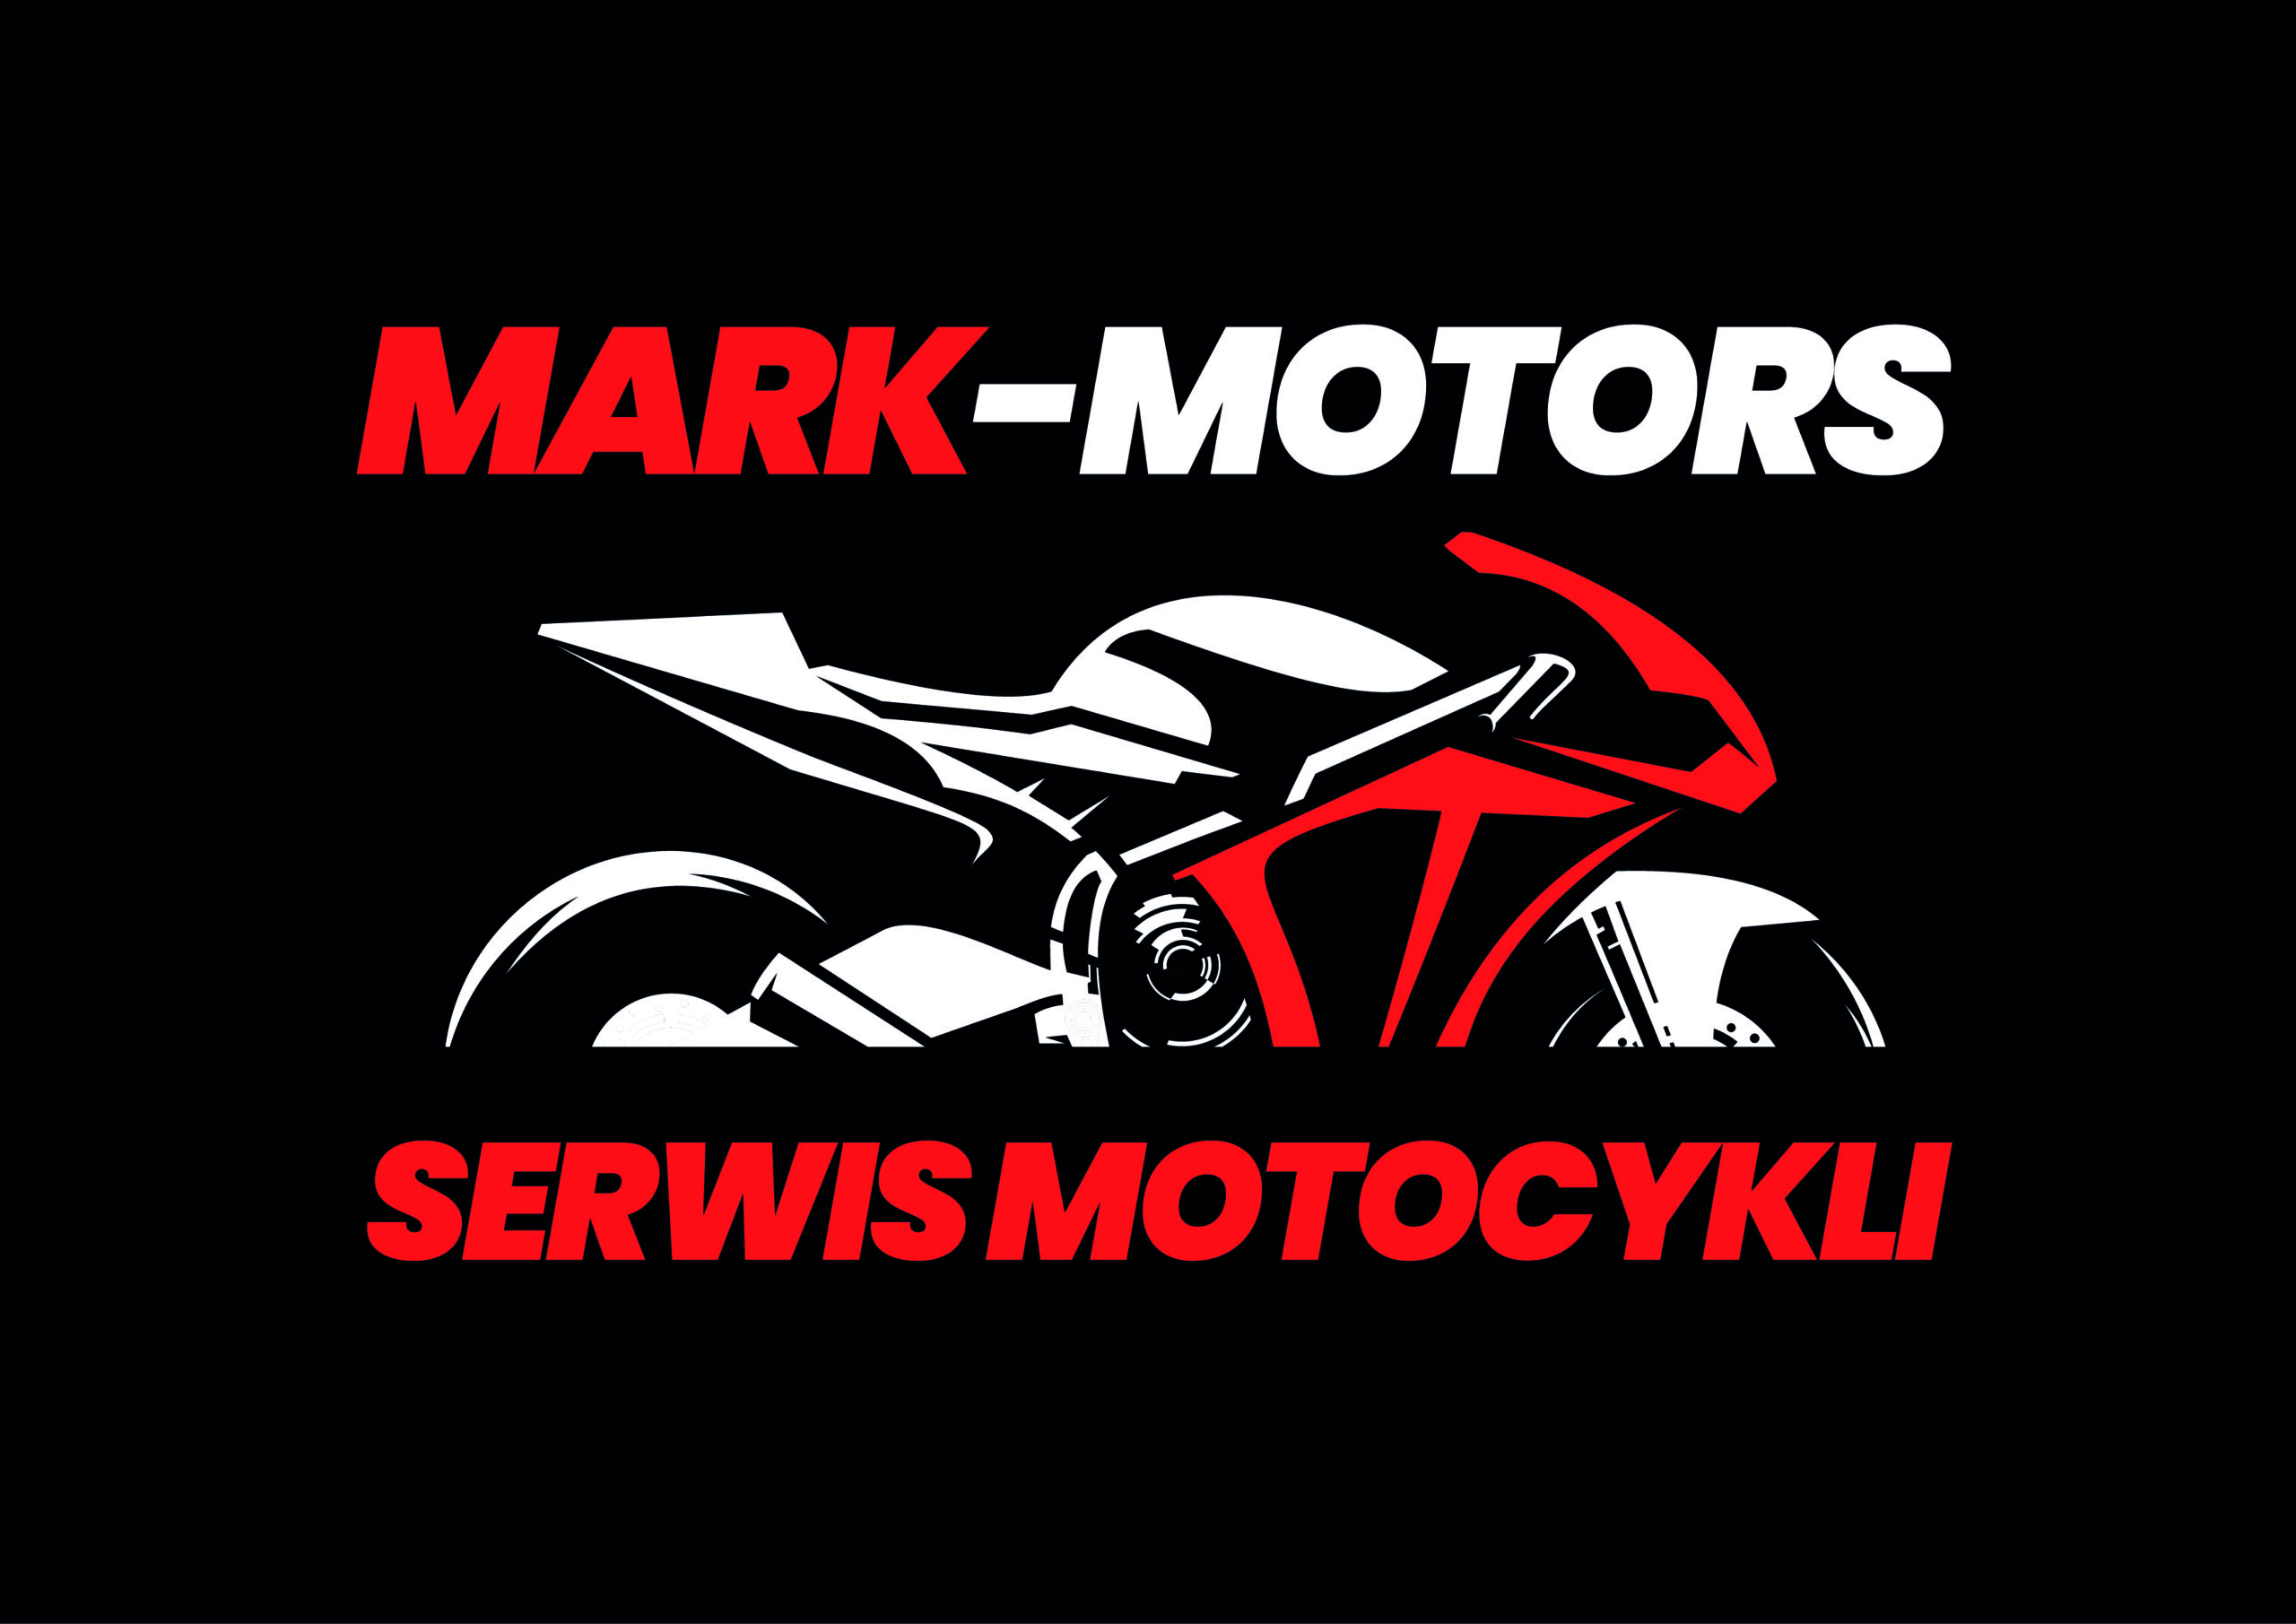 MARK-MOTORS Serwis Motocykli